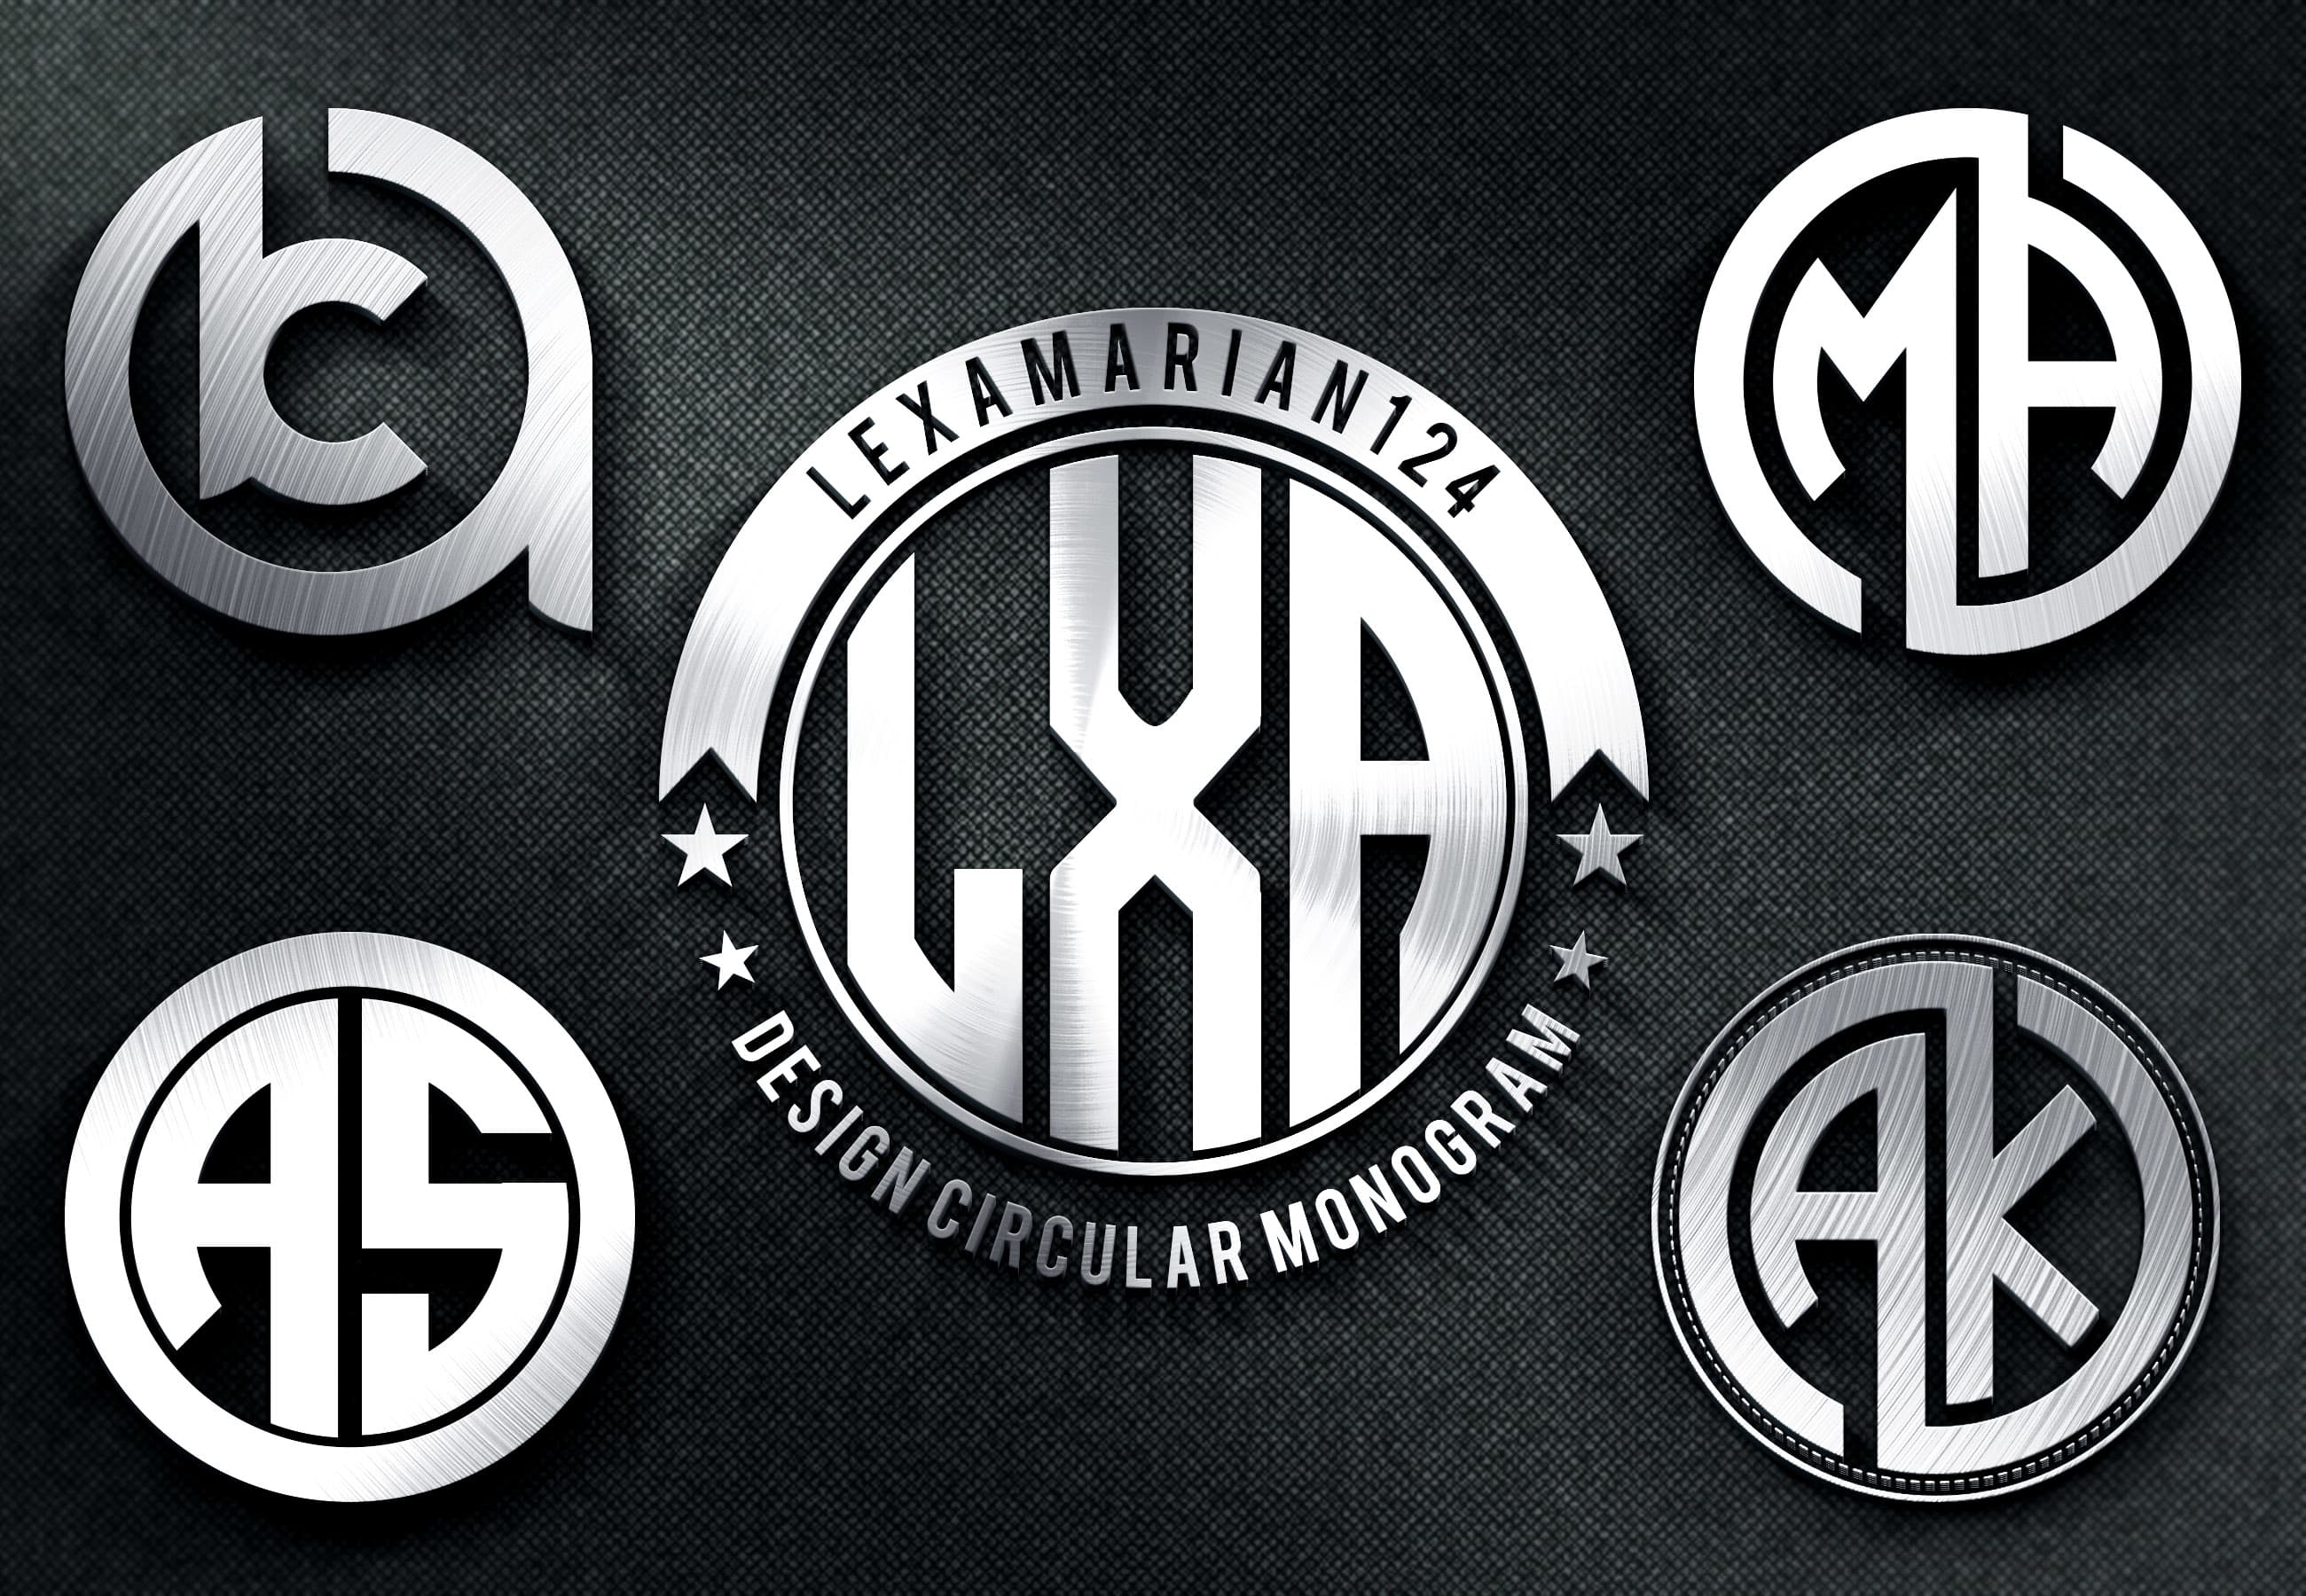 Design Badge Or Circular Monogram Logo Design By Lexamarian124